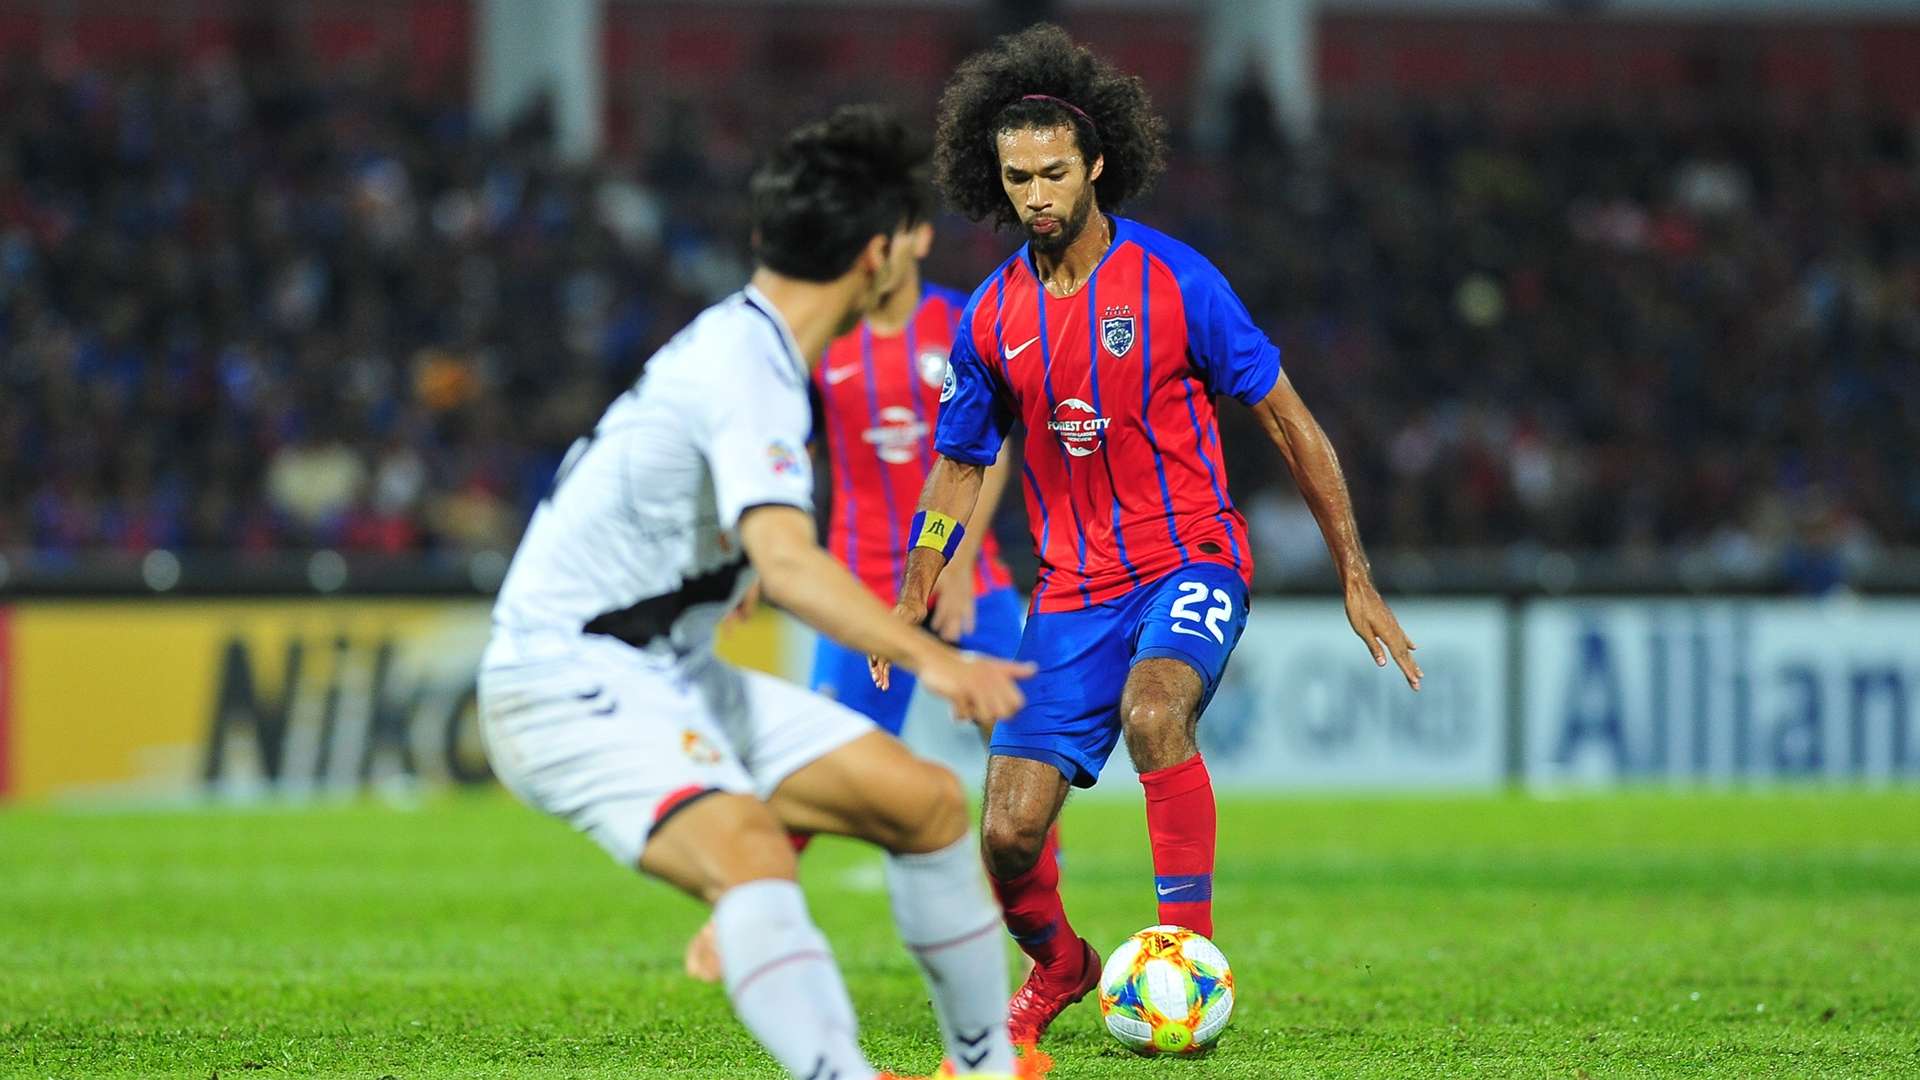 La'Vere Corbin-Ong, Johor Darul Ta'zim v Gyeongnam, AFC Champions League, 12 Mar 2019